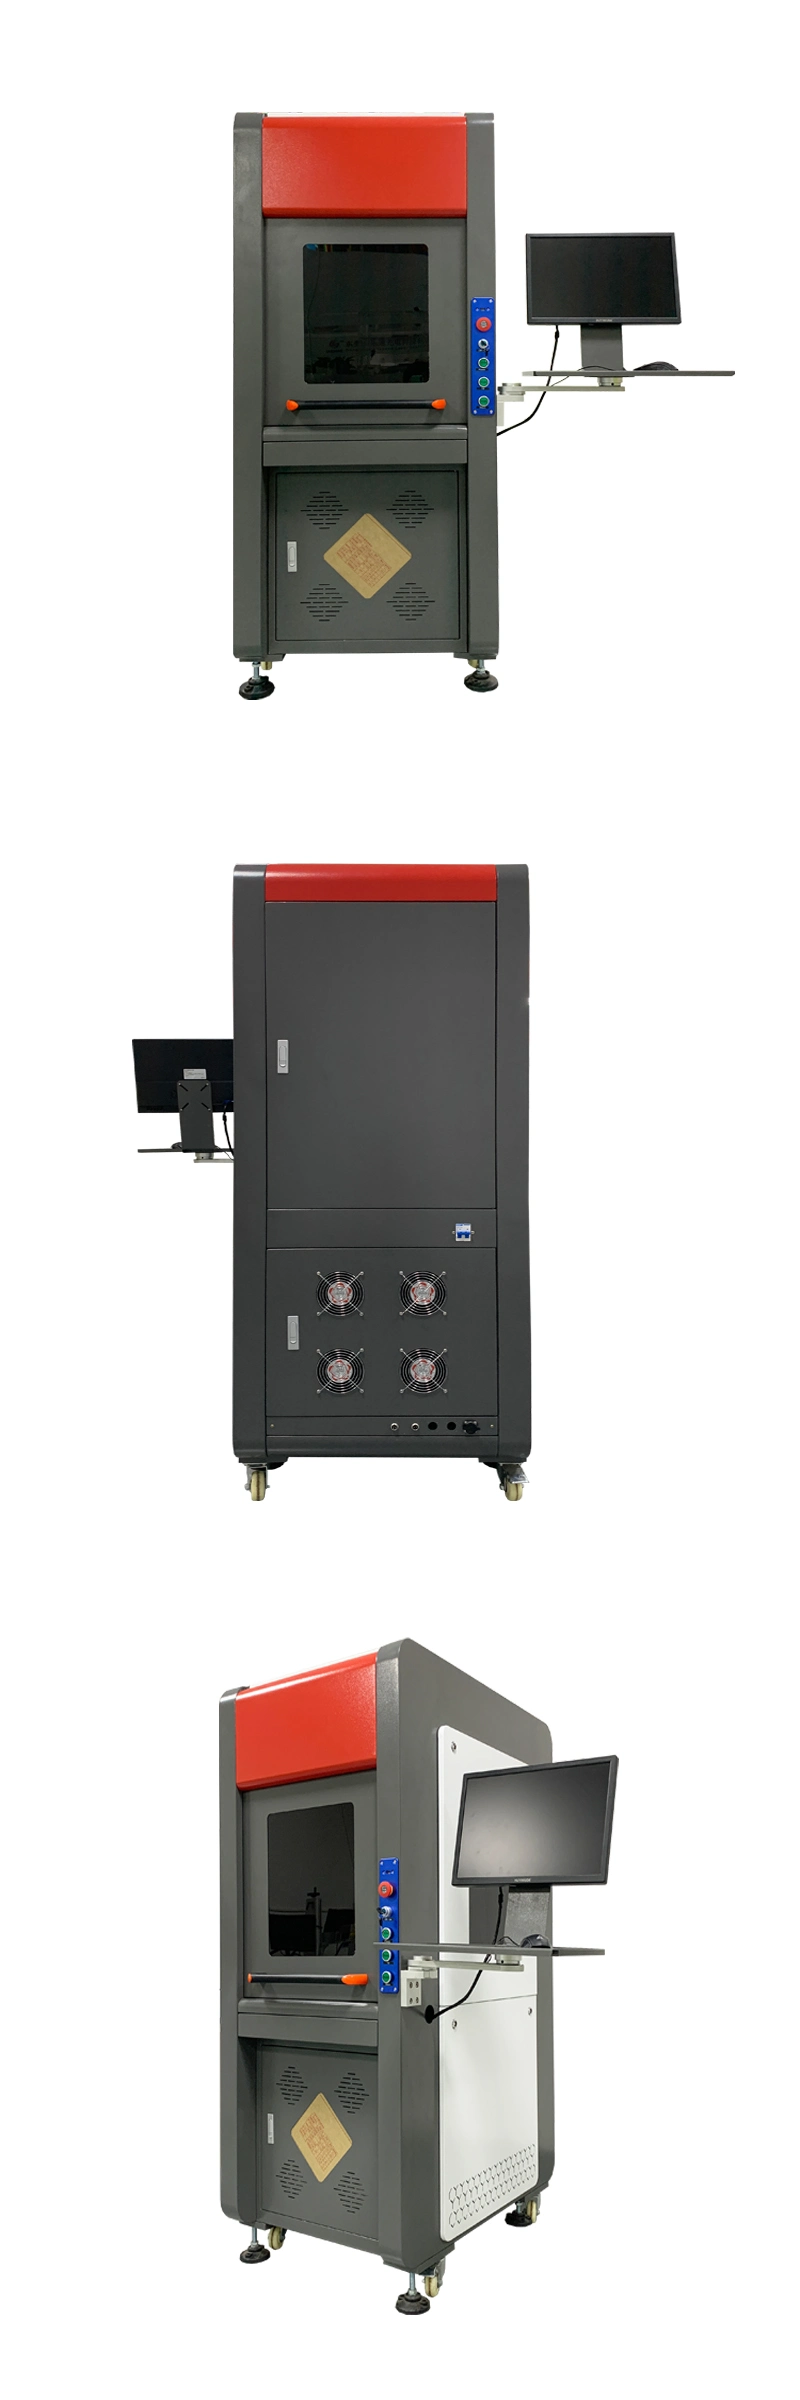 30W High Quality Desktop Fiber Laser Marking Machine Laser System Laser Engraver Fo Industrial Machineries